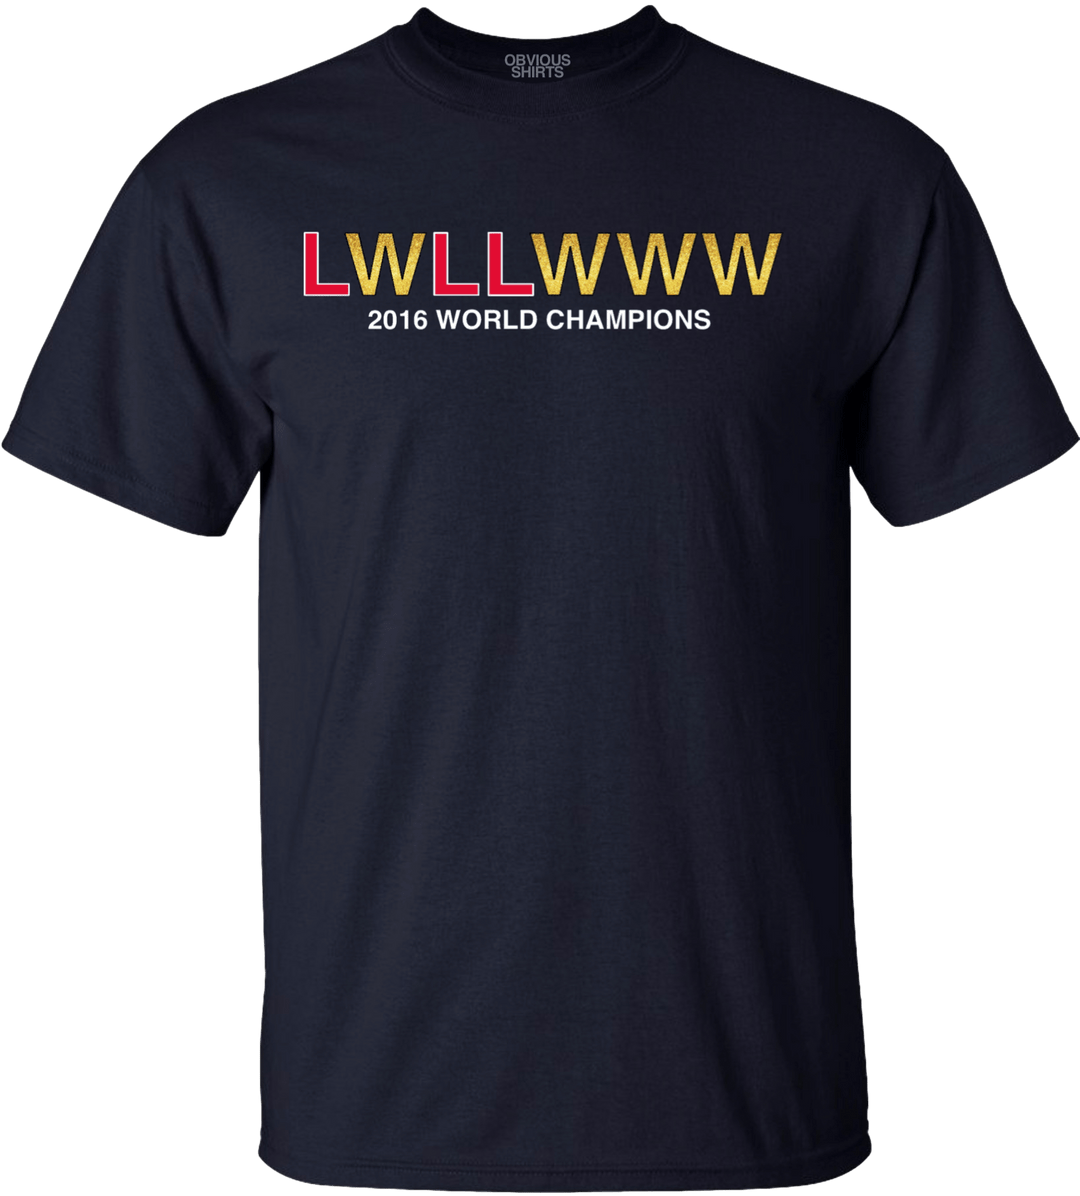 LWLLWWW NAVY - ANNIVERSARY EDITION (BIG & TALL) - OBVIOUS SHIRTS